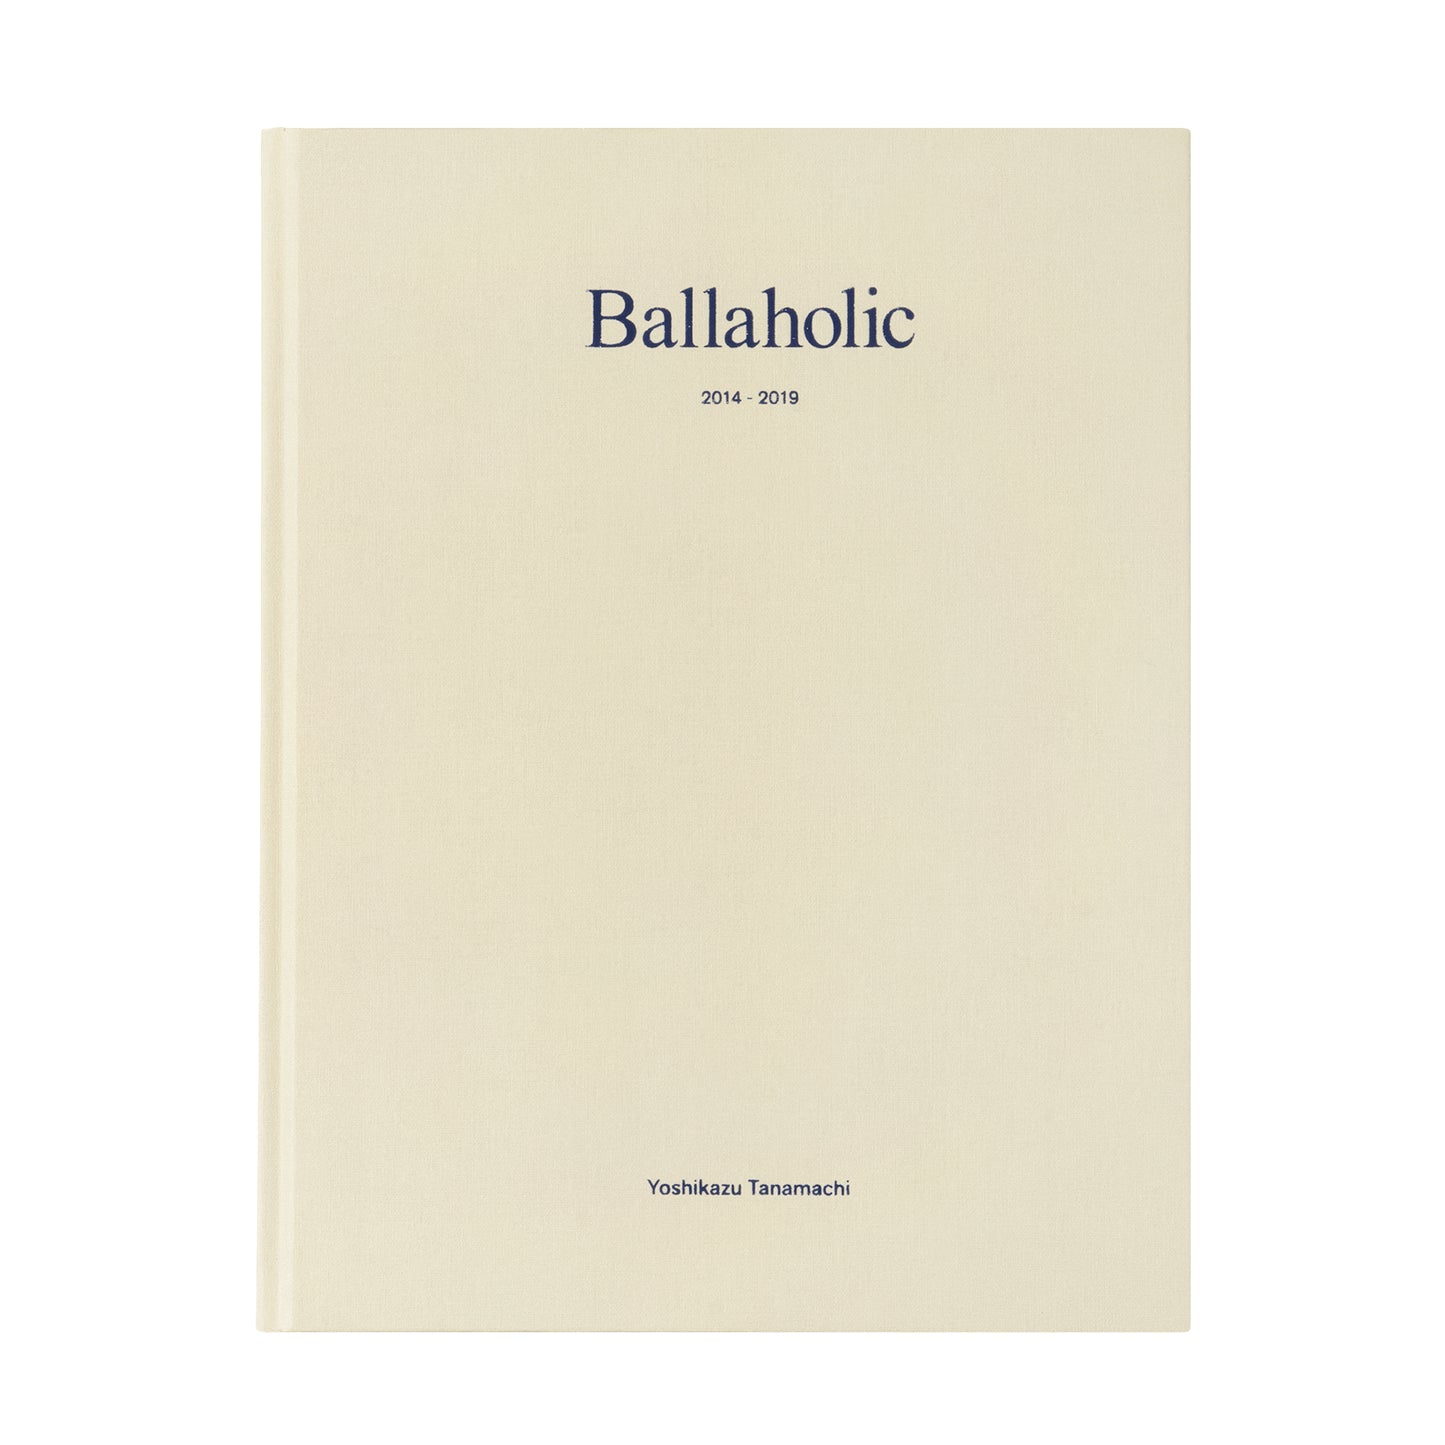 Ballaholic 2014-2019 Yoshikazu Tanamachi